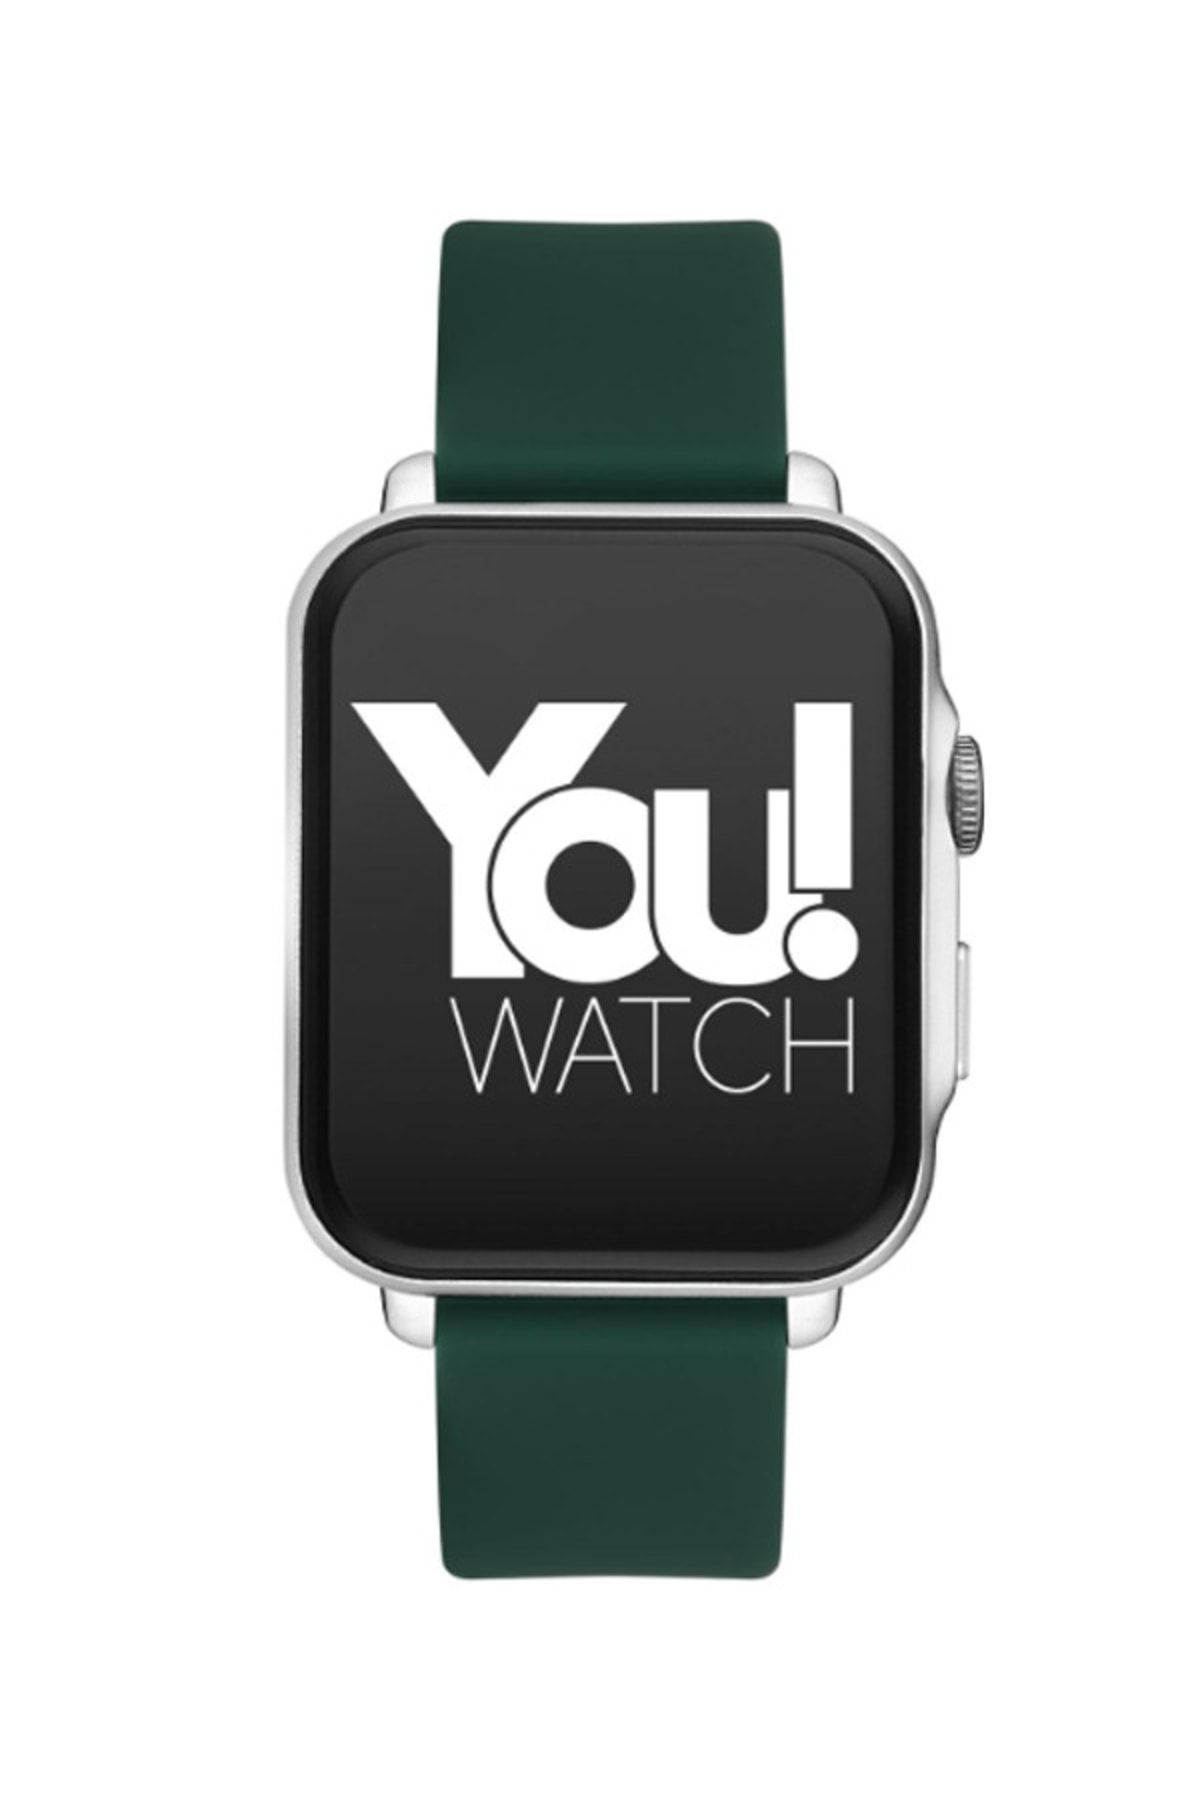 You Watch Youwatch F13-yf134 Gümüş Kasa & Koyu Yeşil Silikon Kordon Akıllı Saat Ios Ve Android Uyumludur.